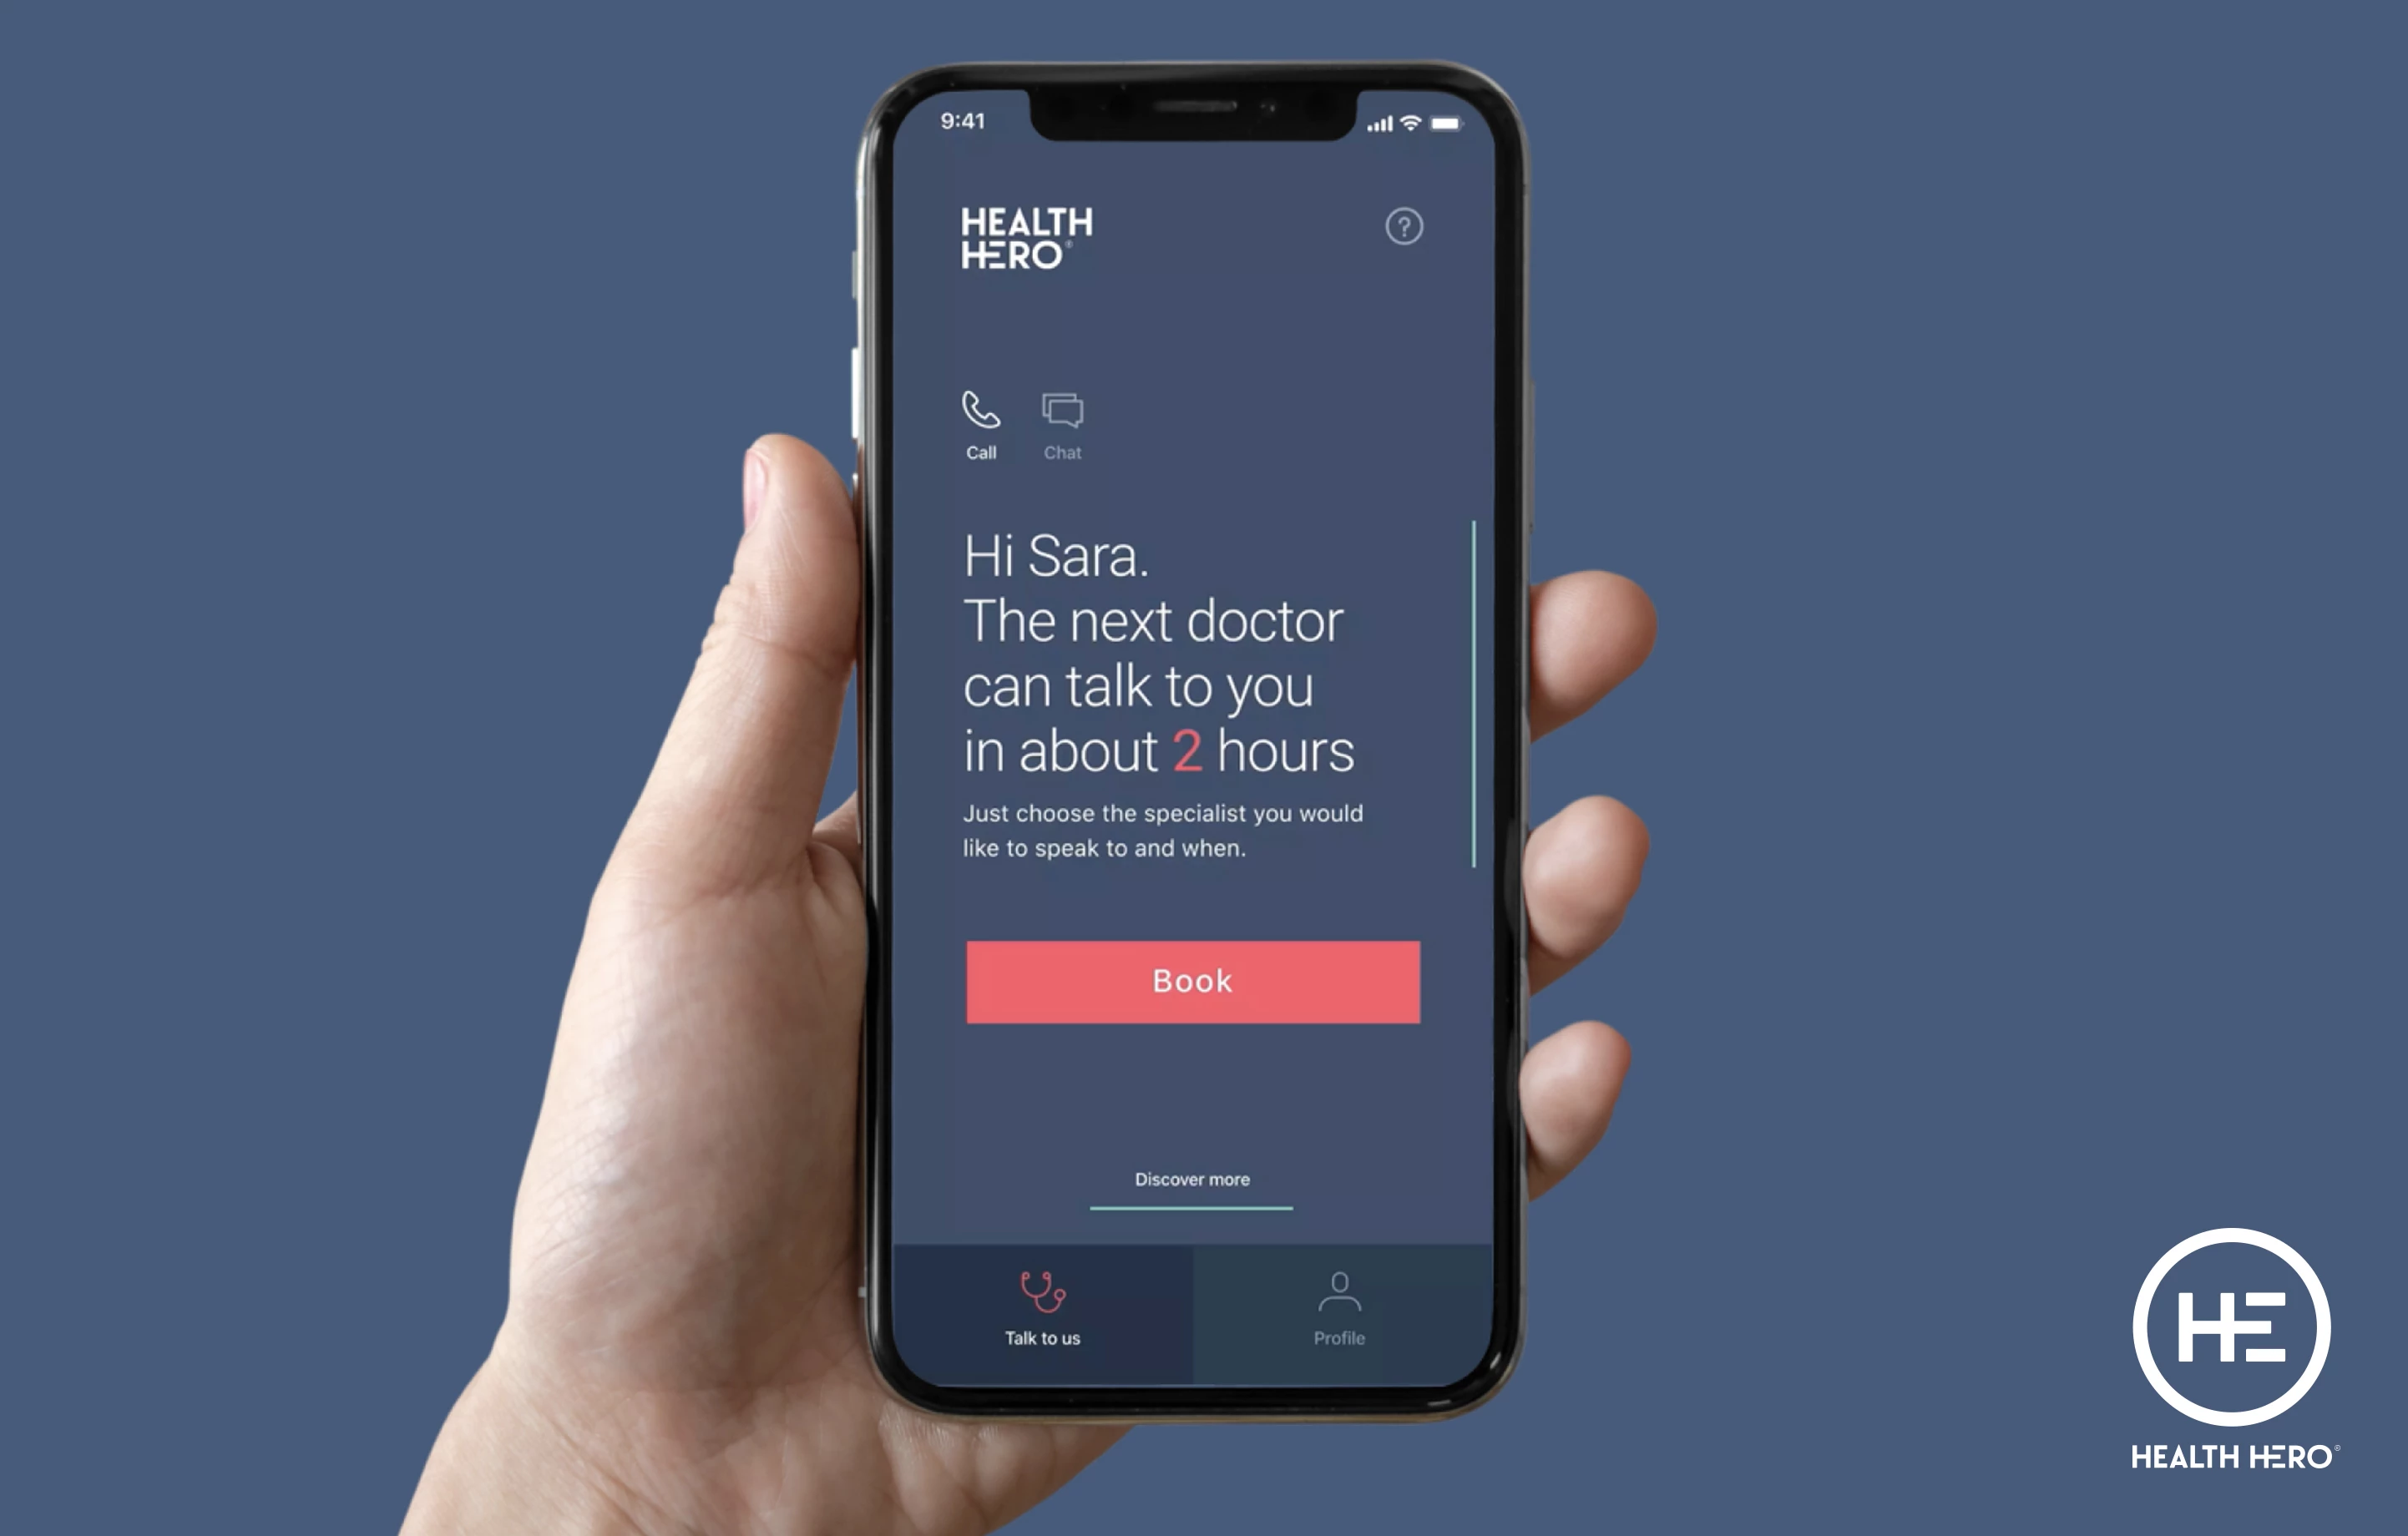 HealthHero is a remote healthcare offering